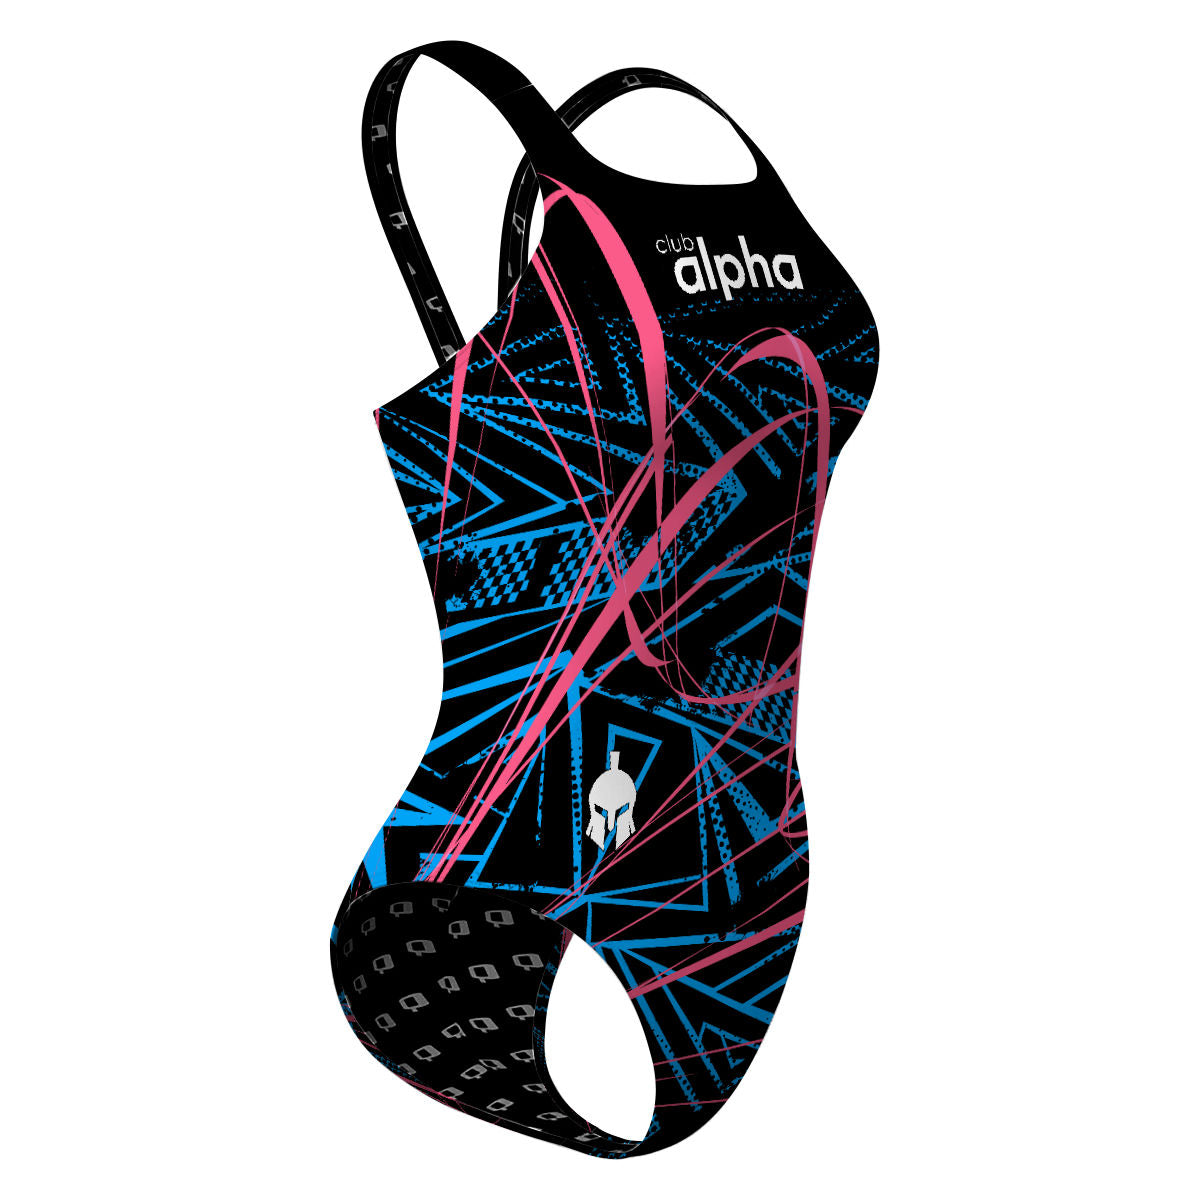 Club Alpha - Classic Strap Swimsuit